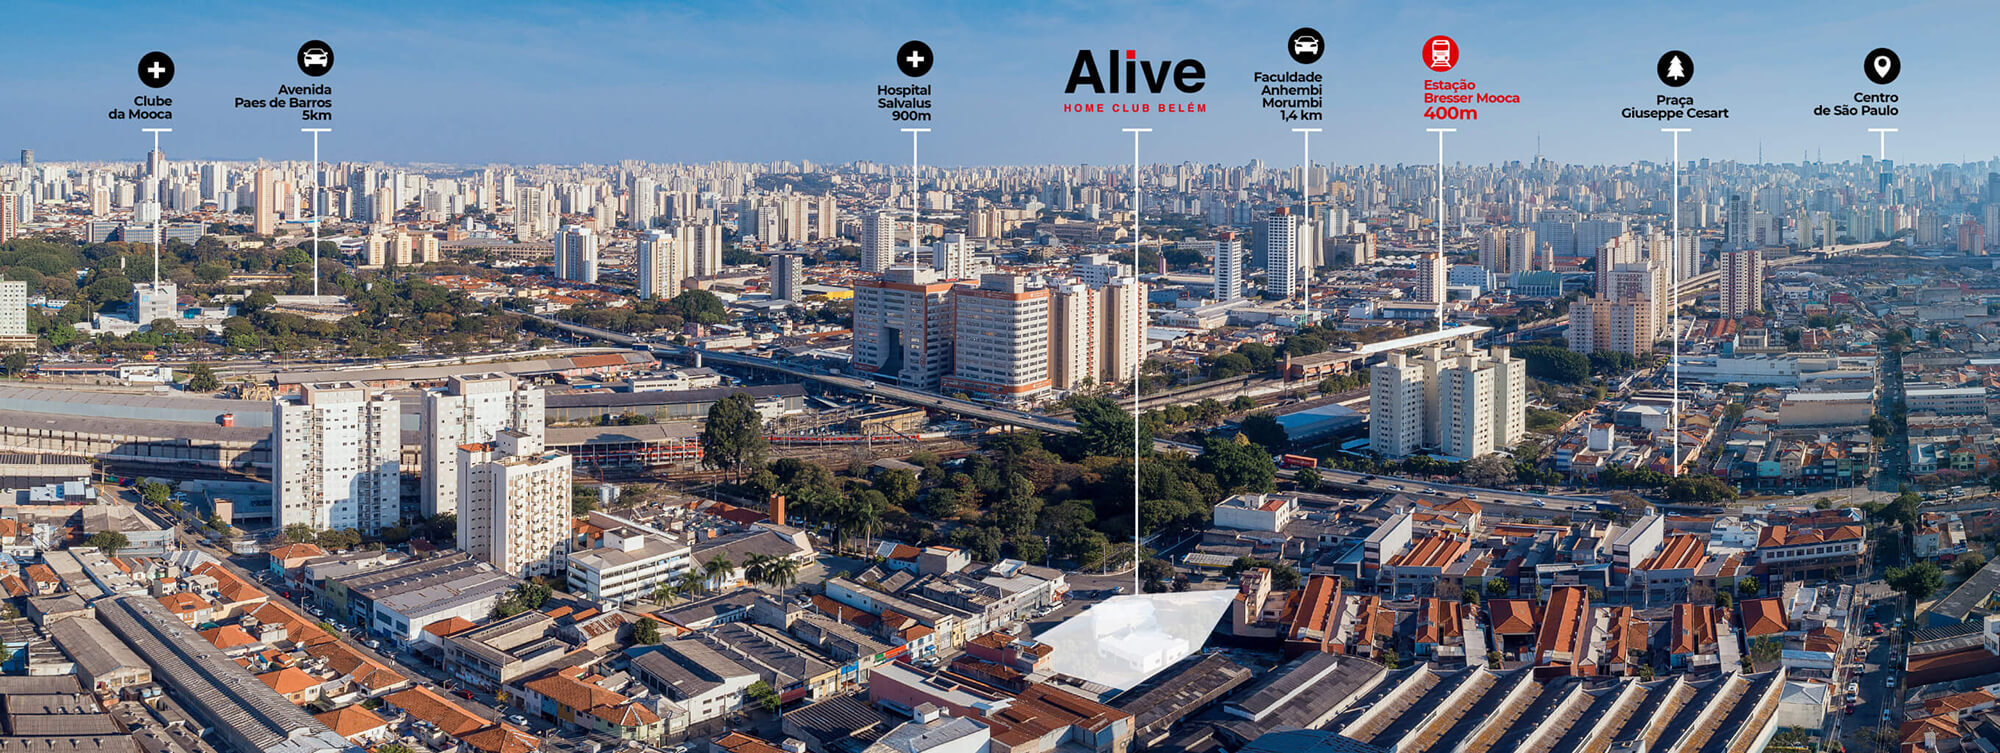 Alive Home Clube Belém - Arredores